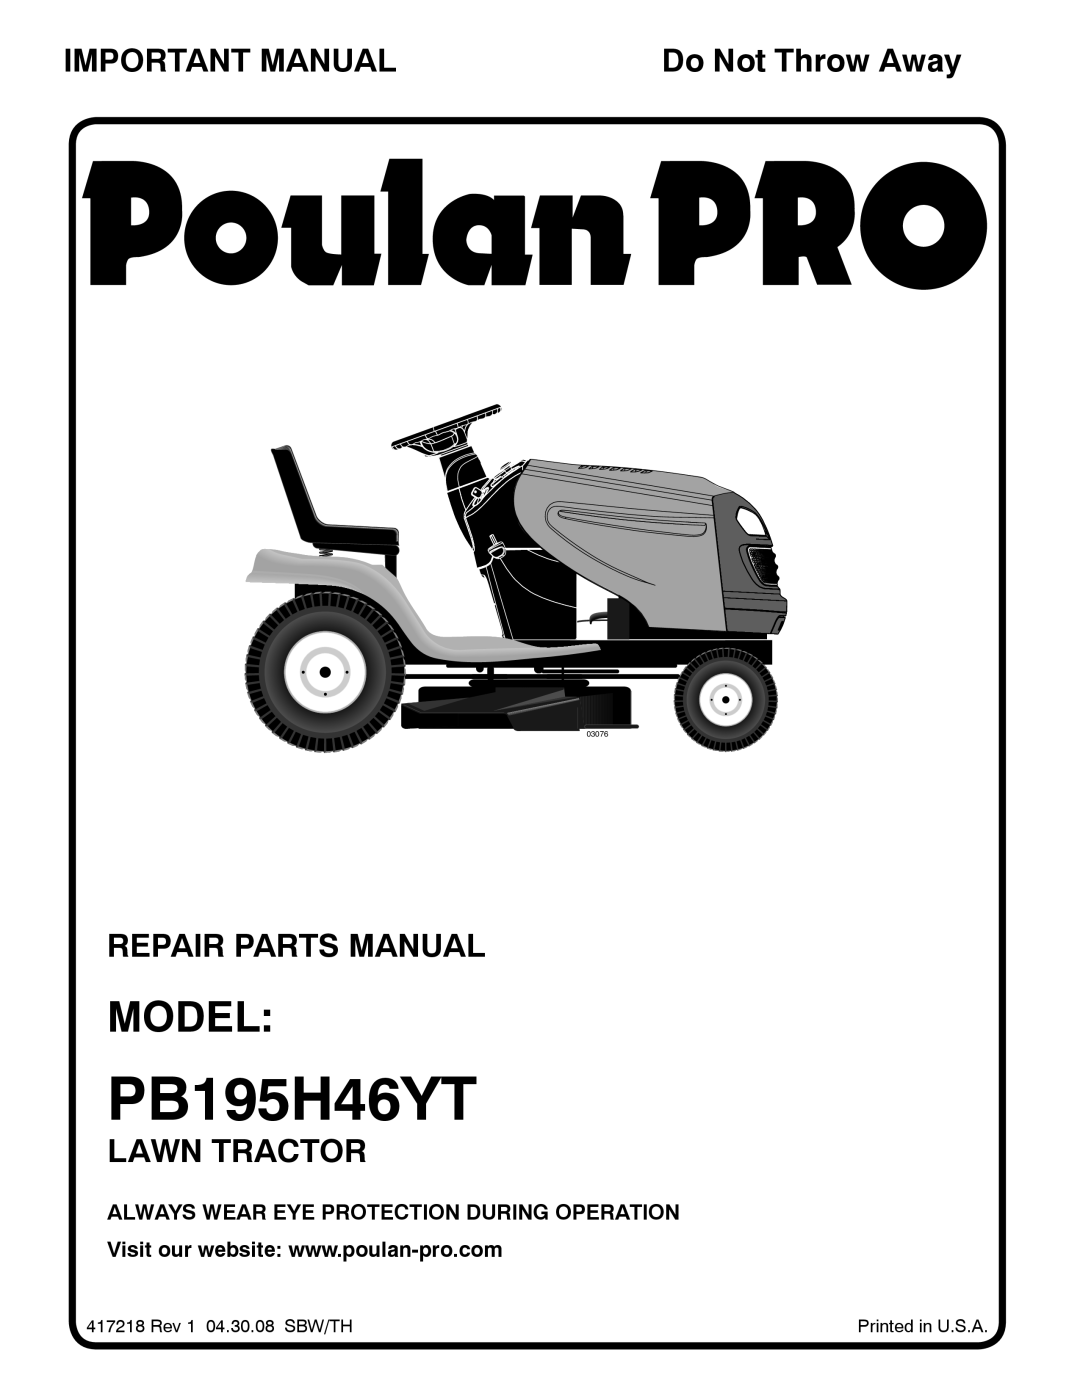 Poulan 96042005900 manual Important Manual, Repair Parts Manual, Lawn Tractor, Do Not Throw Away, PB195H46YT, Model, 03076 